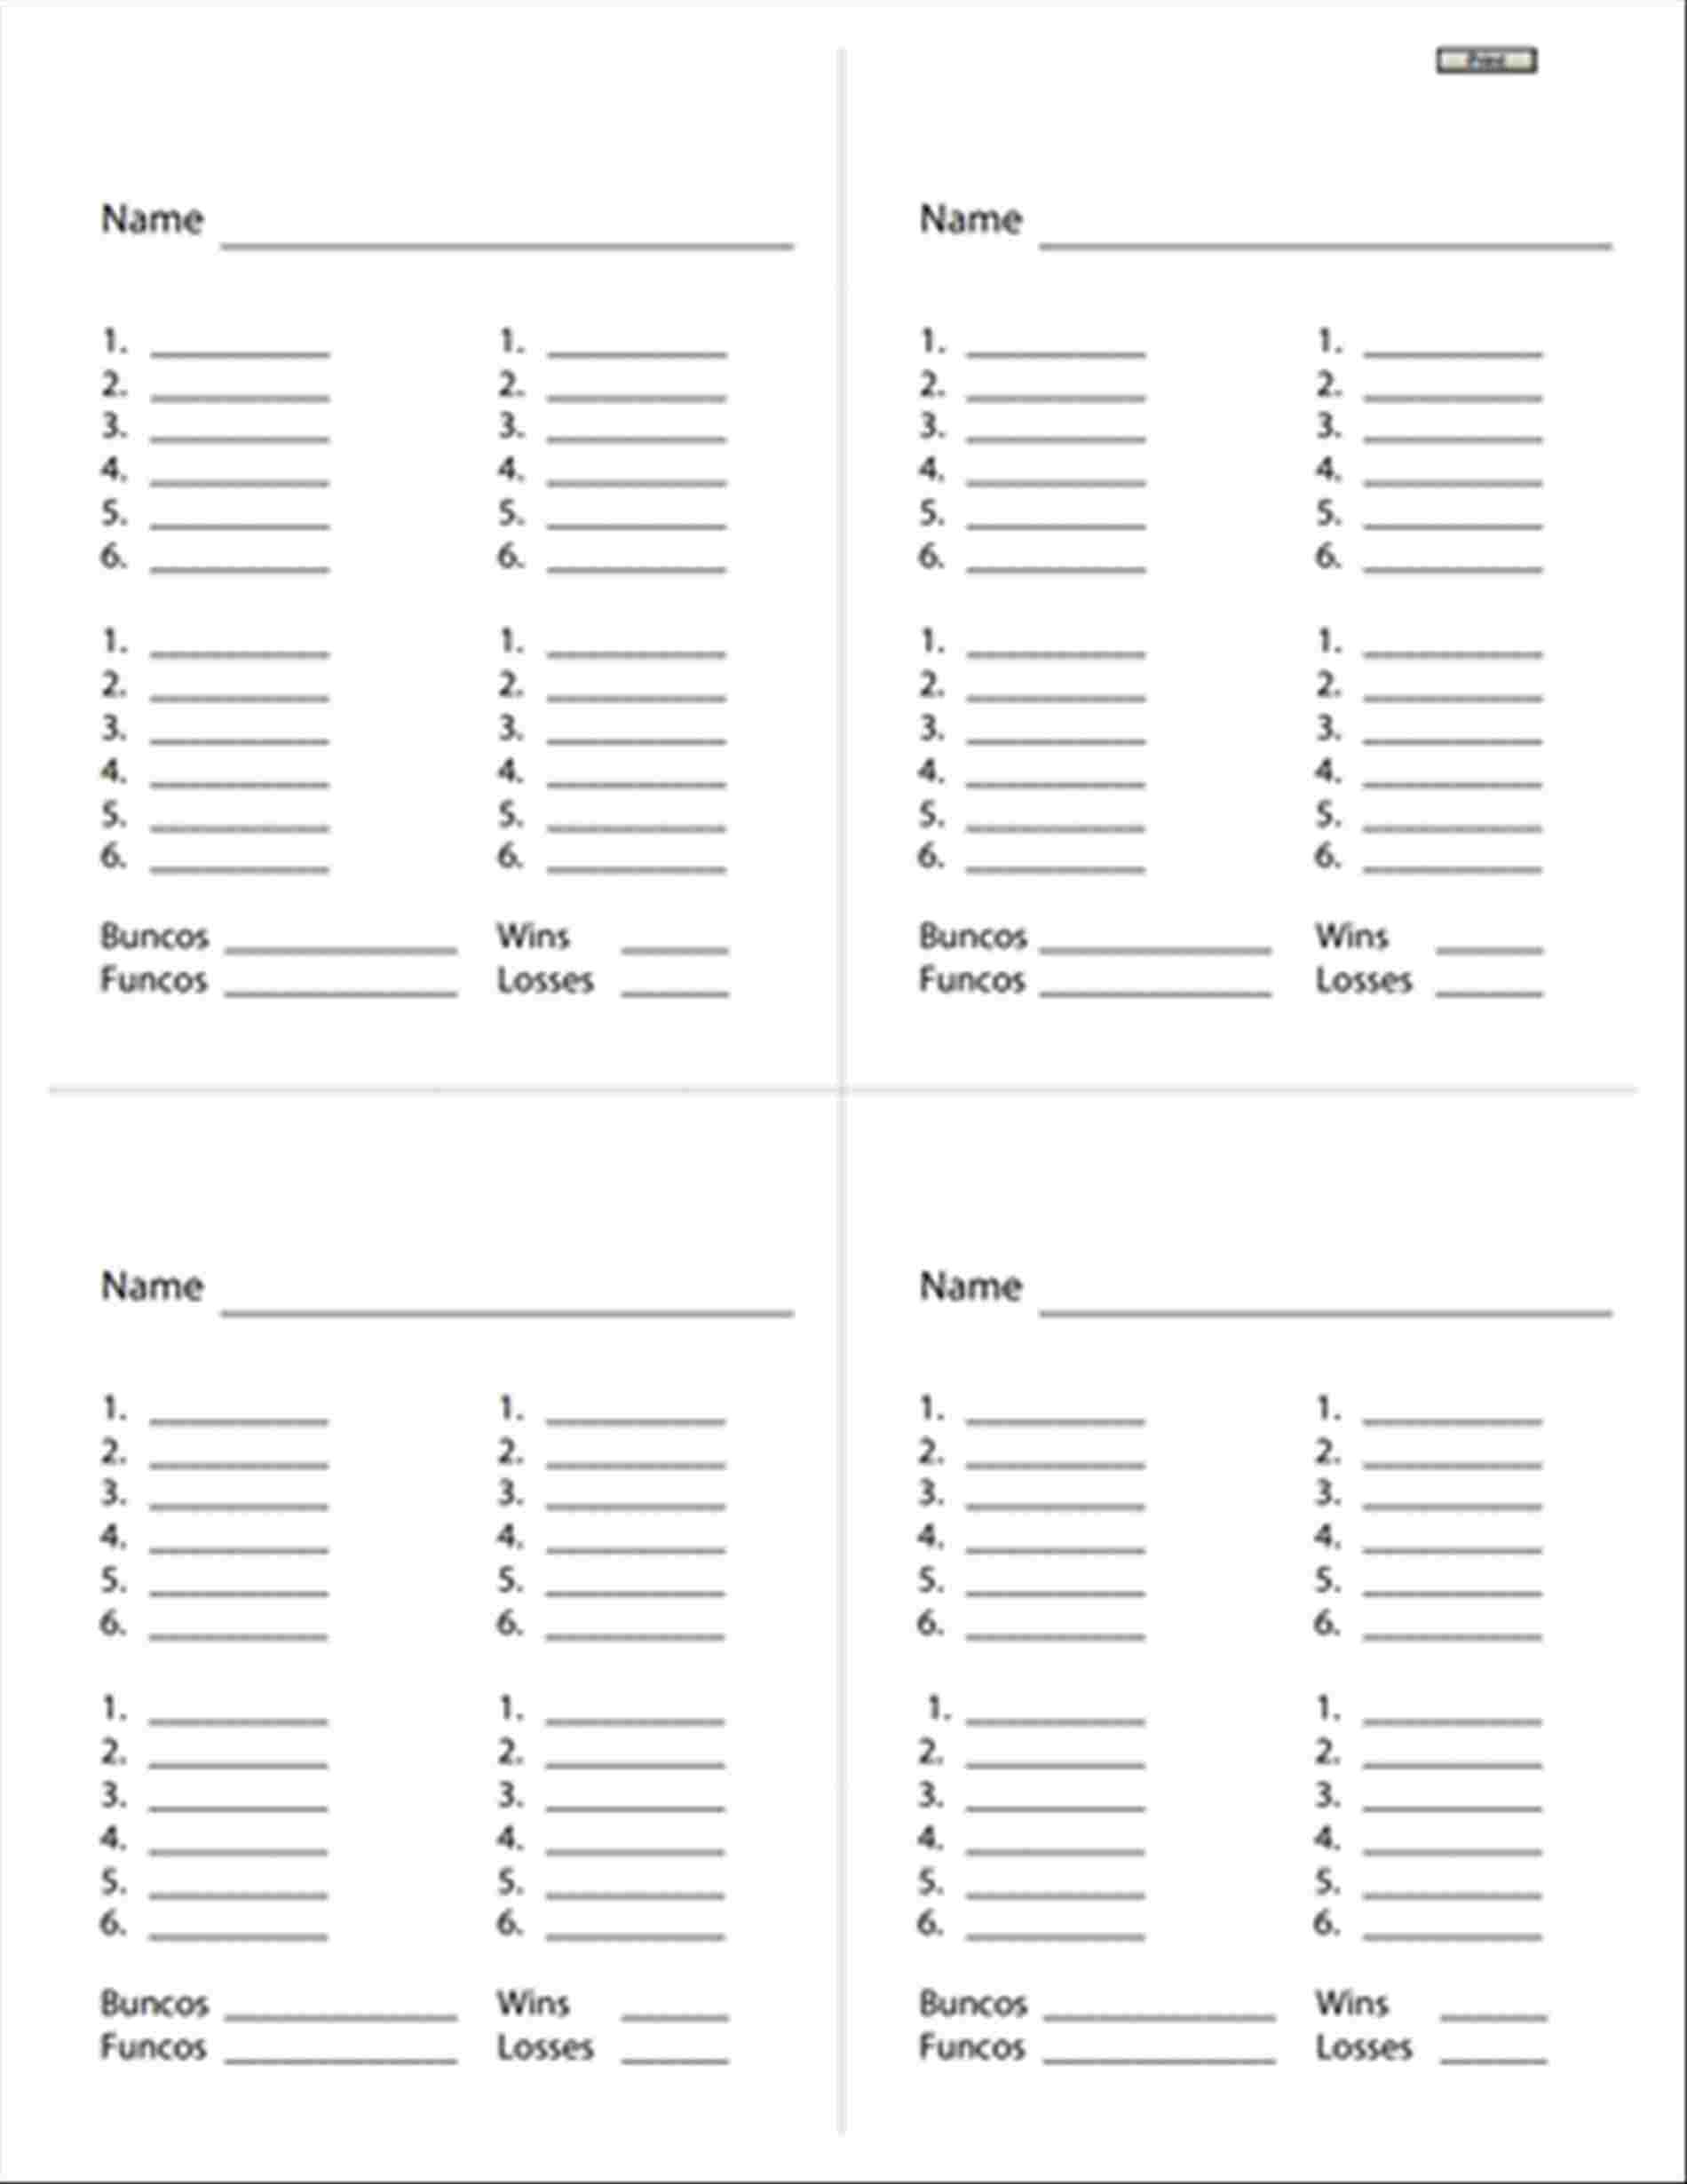 Printable Template Bunco Score Sheets Printable Templates